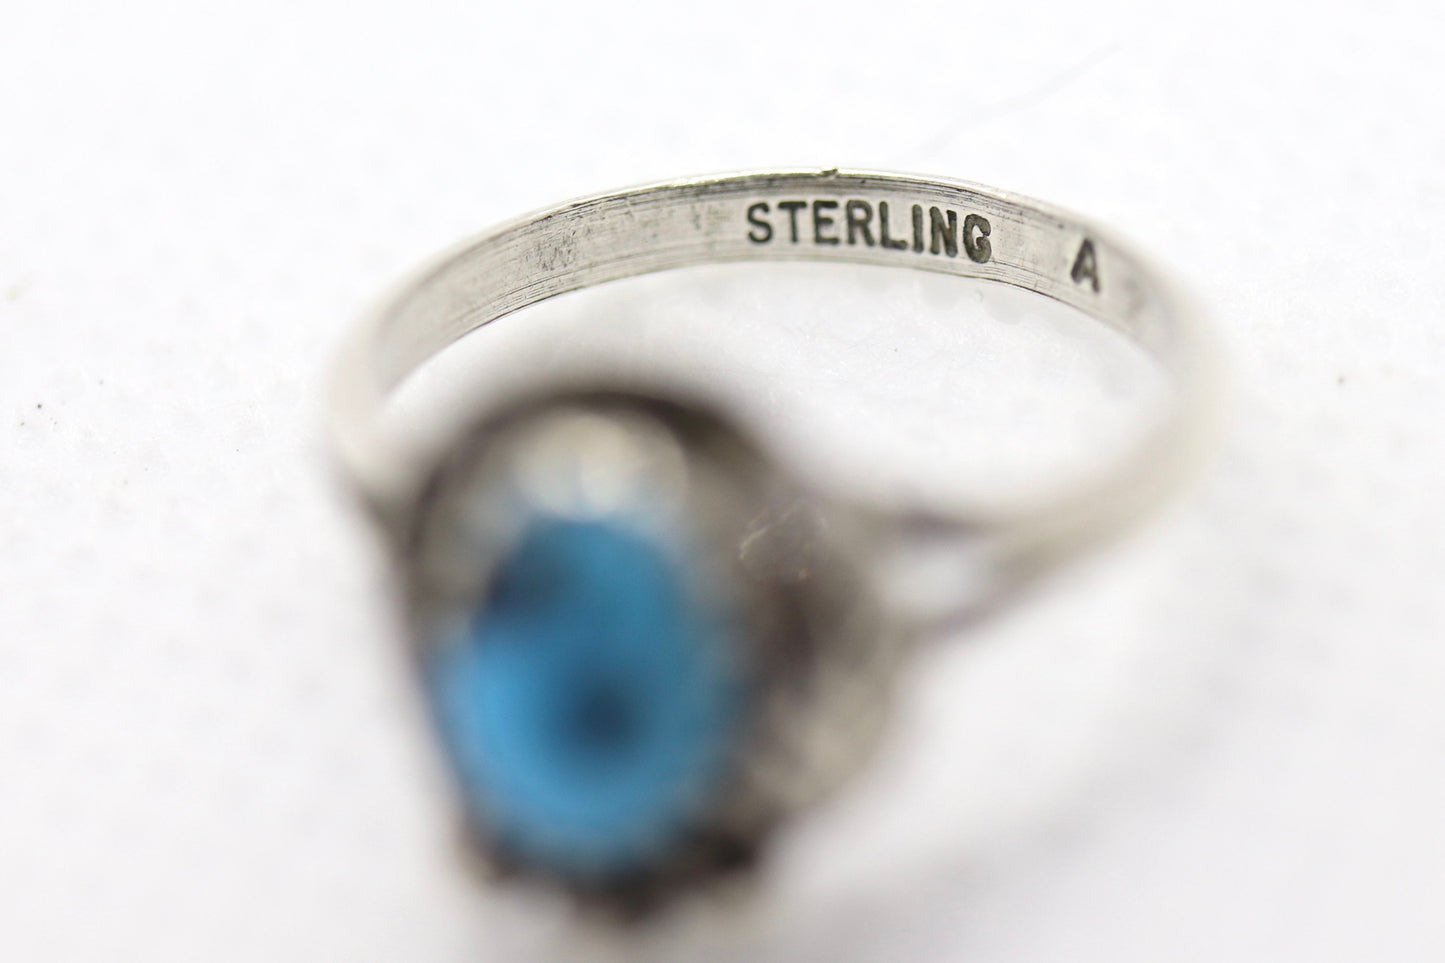 Vintage Turquoise Navajo Rings. Sterling Silver 925 Southwestern rings